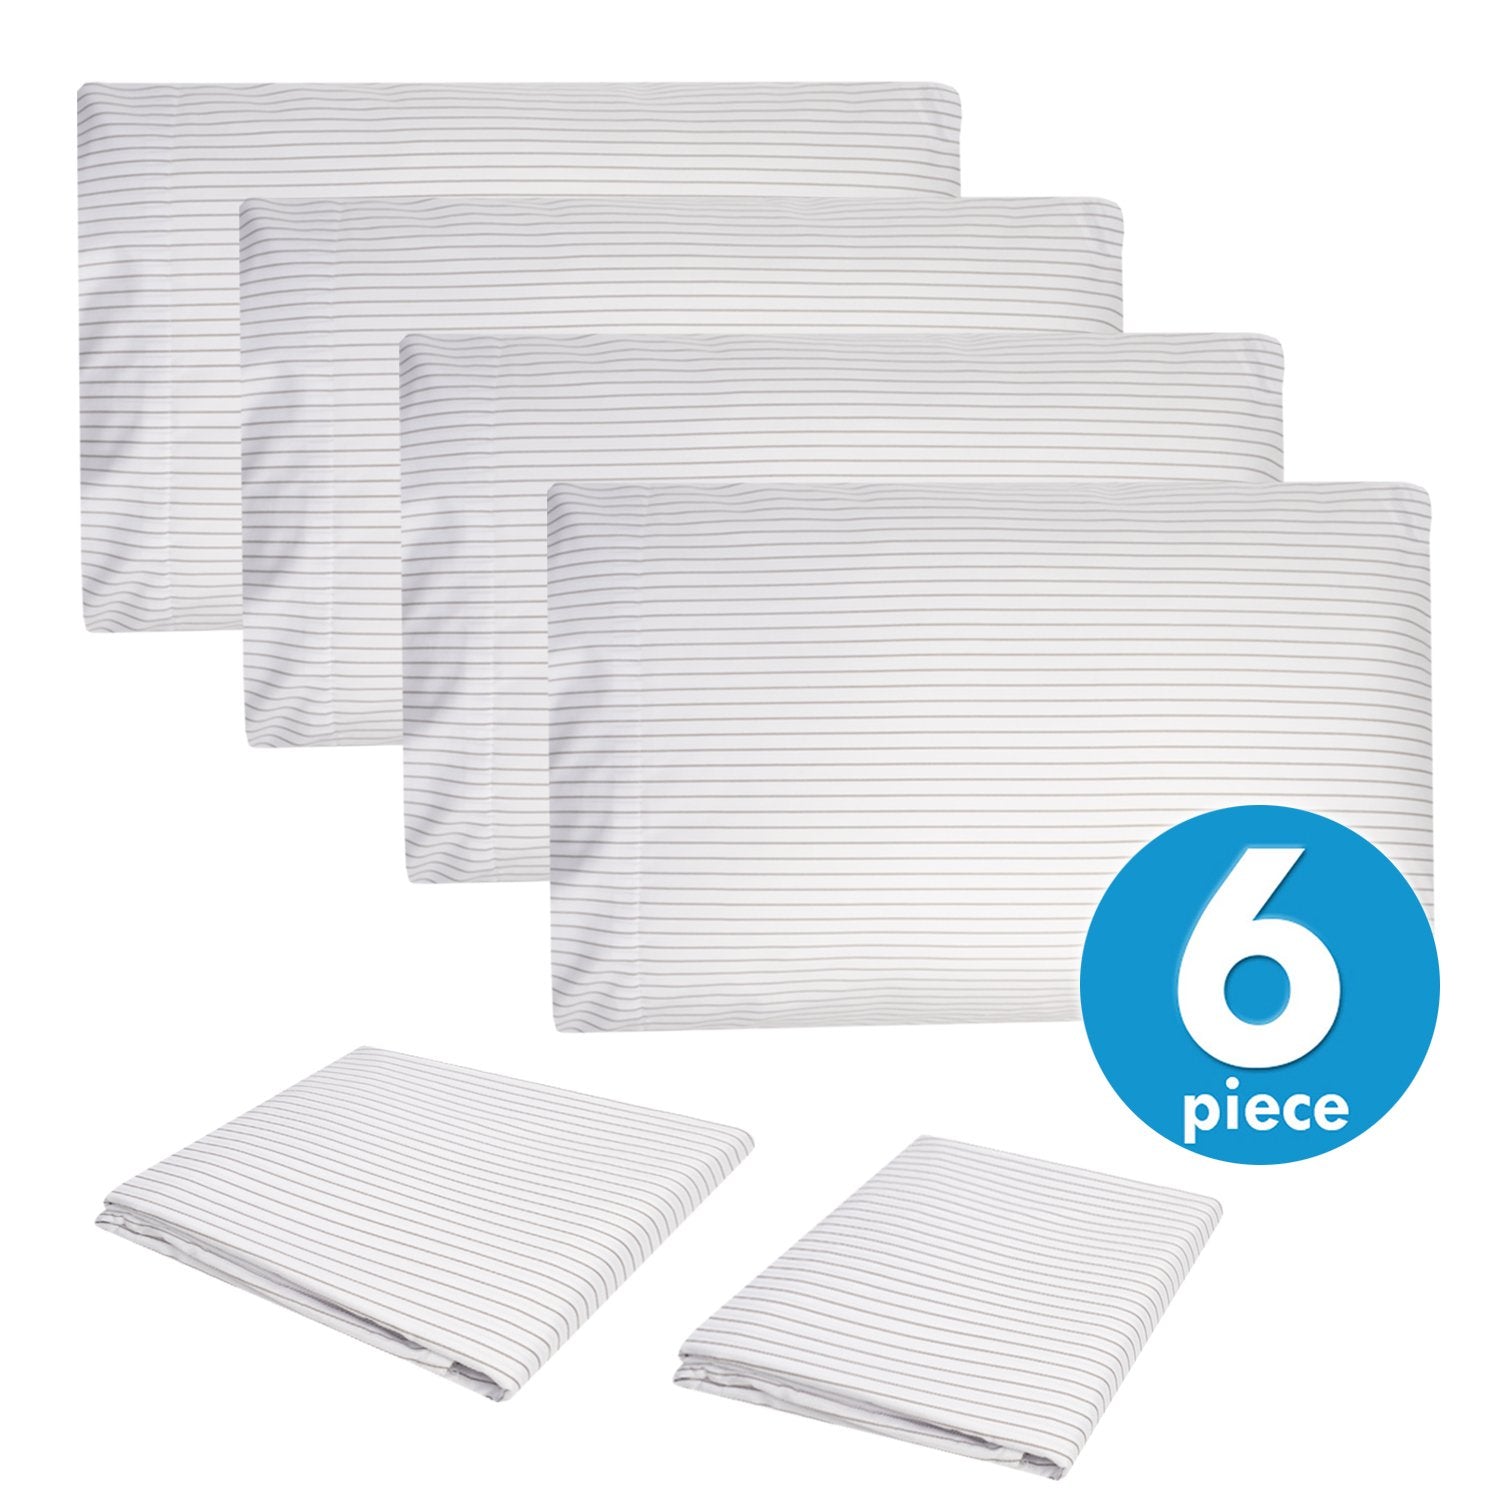 Deluxe 6-Piece Bed Sheet Set (Loft Pinstripe White) - Set